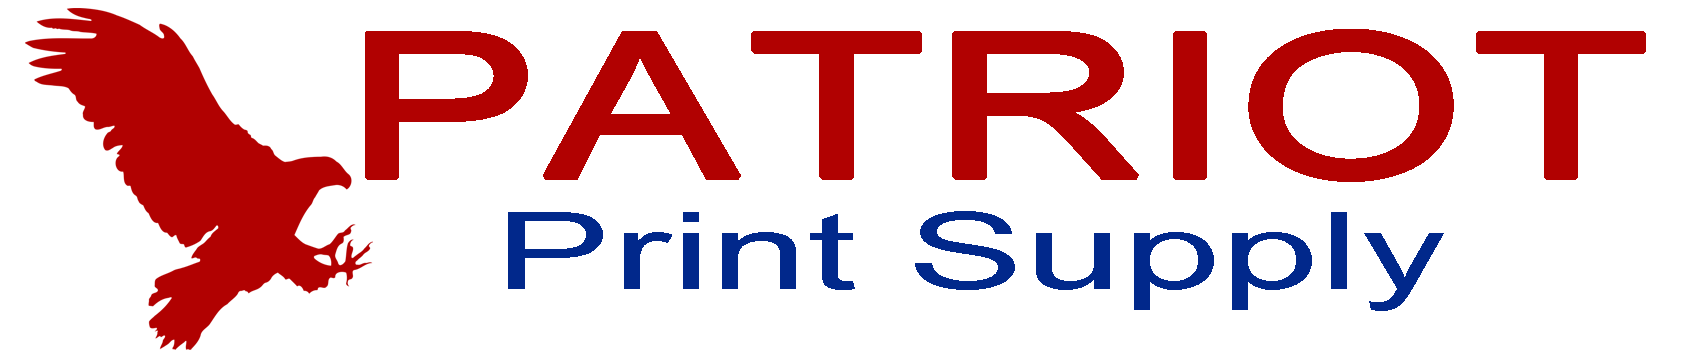 Patriot Print Supply